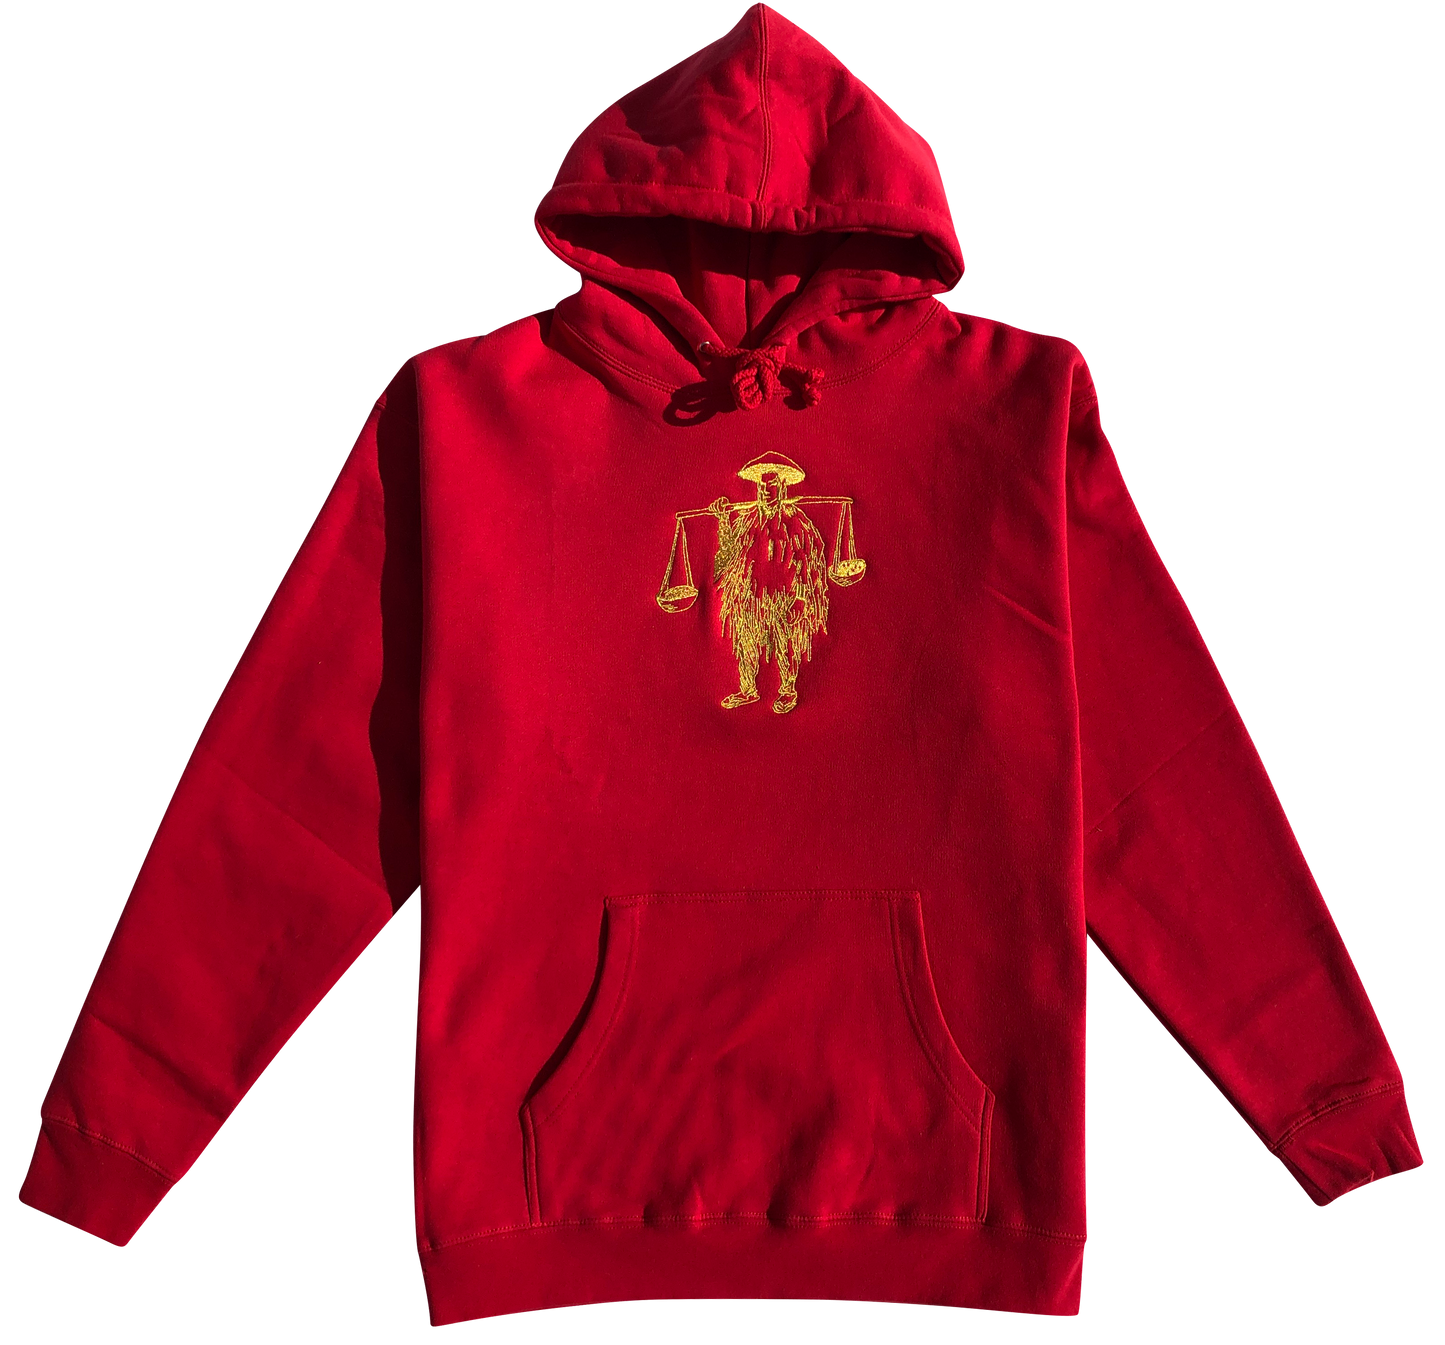 Shotta Man Embroidered Hoodie (Red) - Shotta Spence